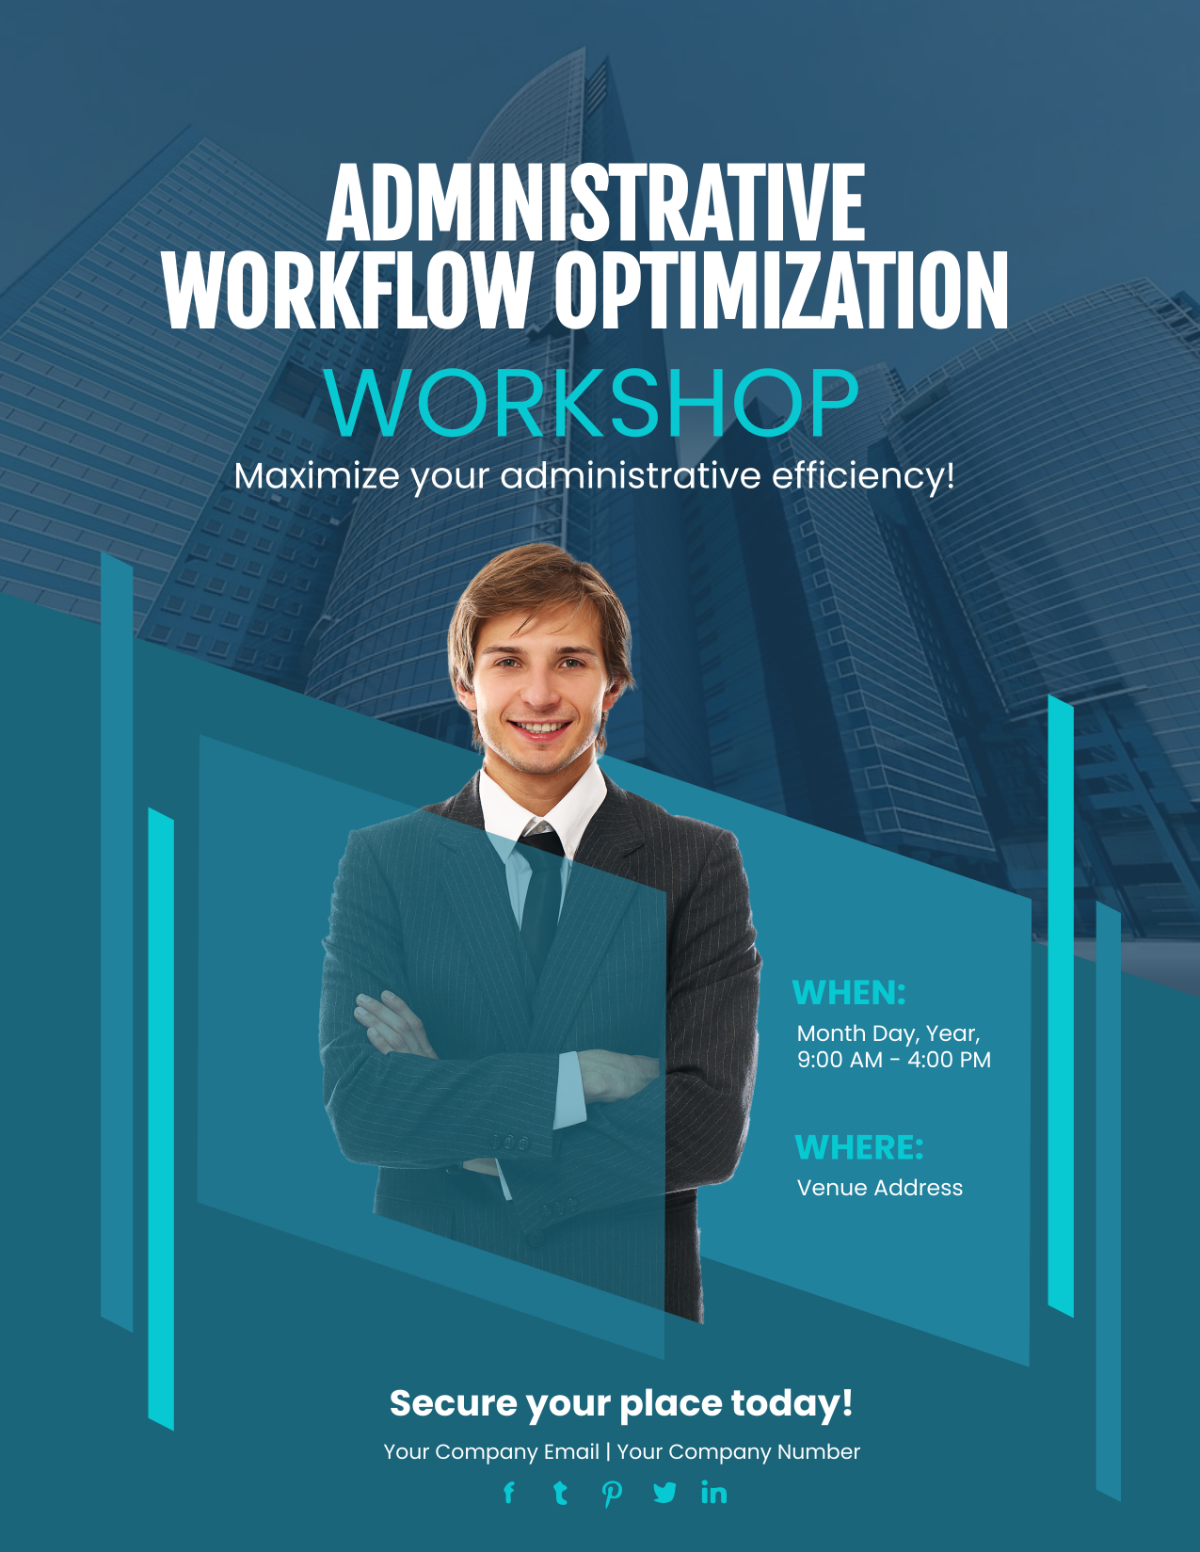 Administrative Workflow Optimization Workshop Flyer Template